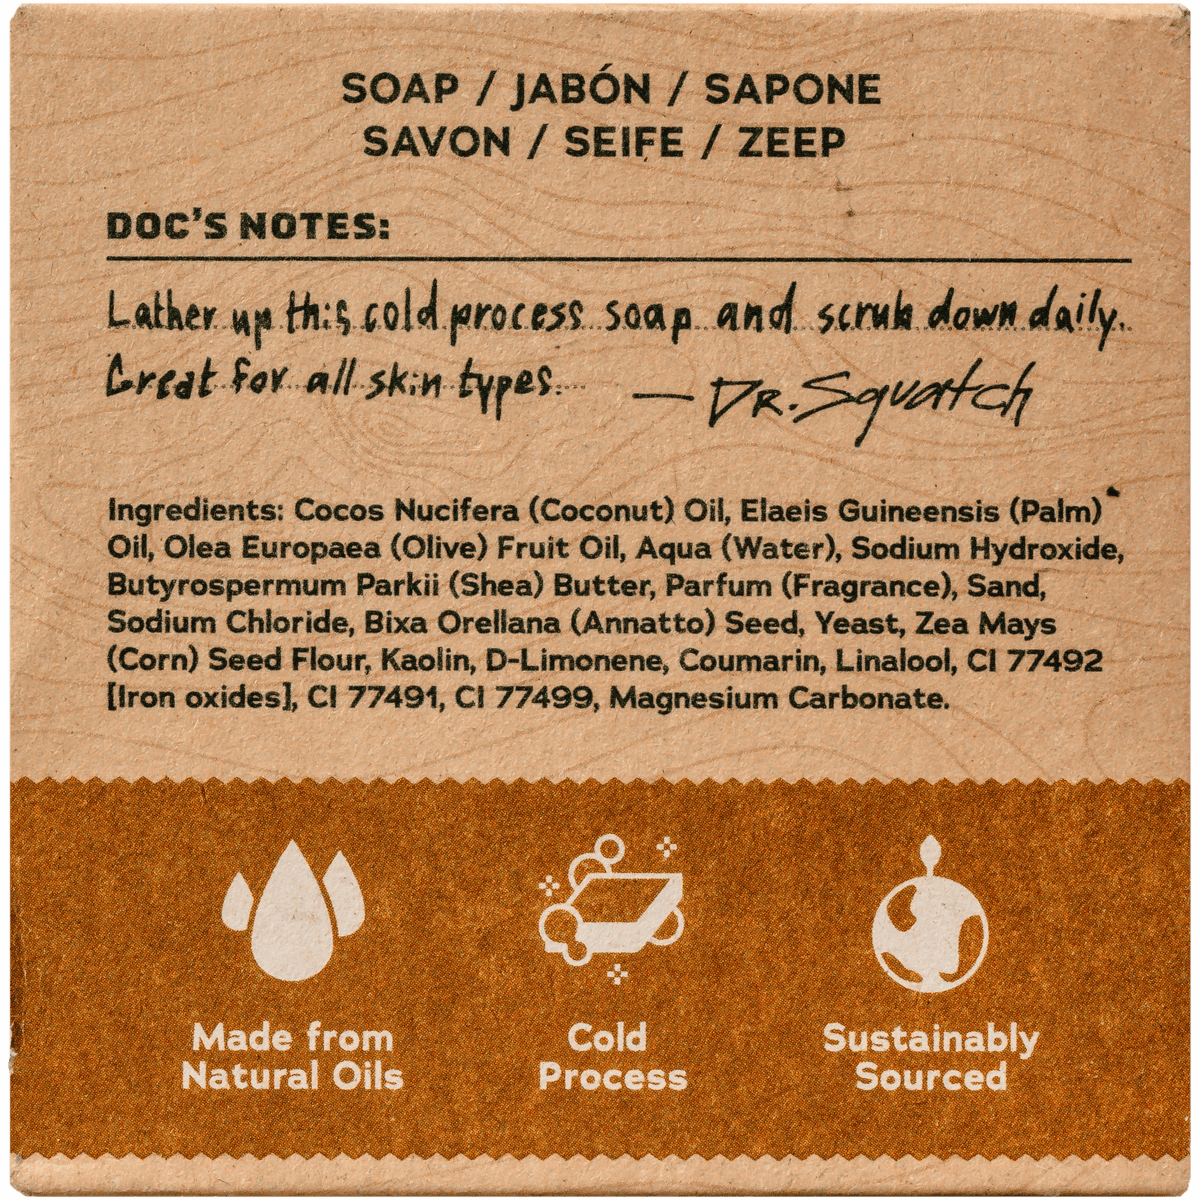 Dr. Squatch Wood Barrel Bourbon Bar Soap